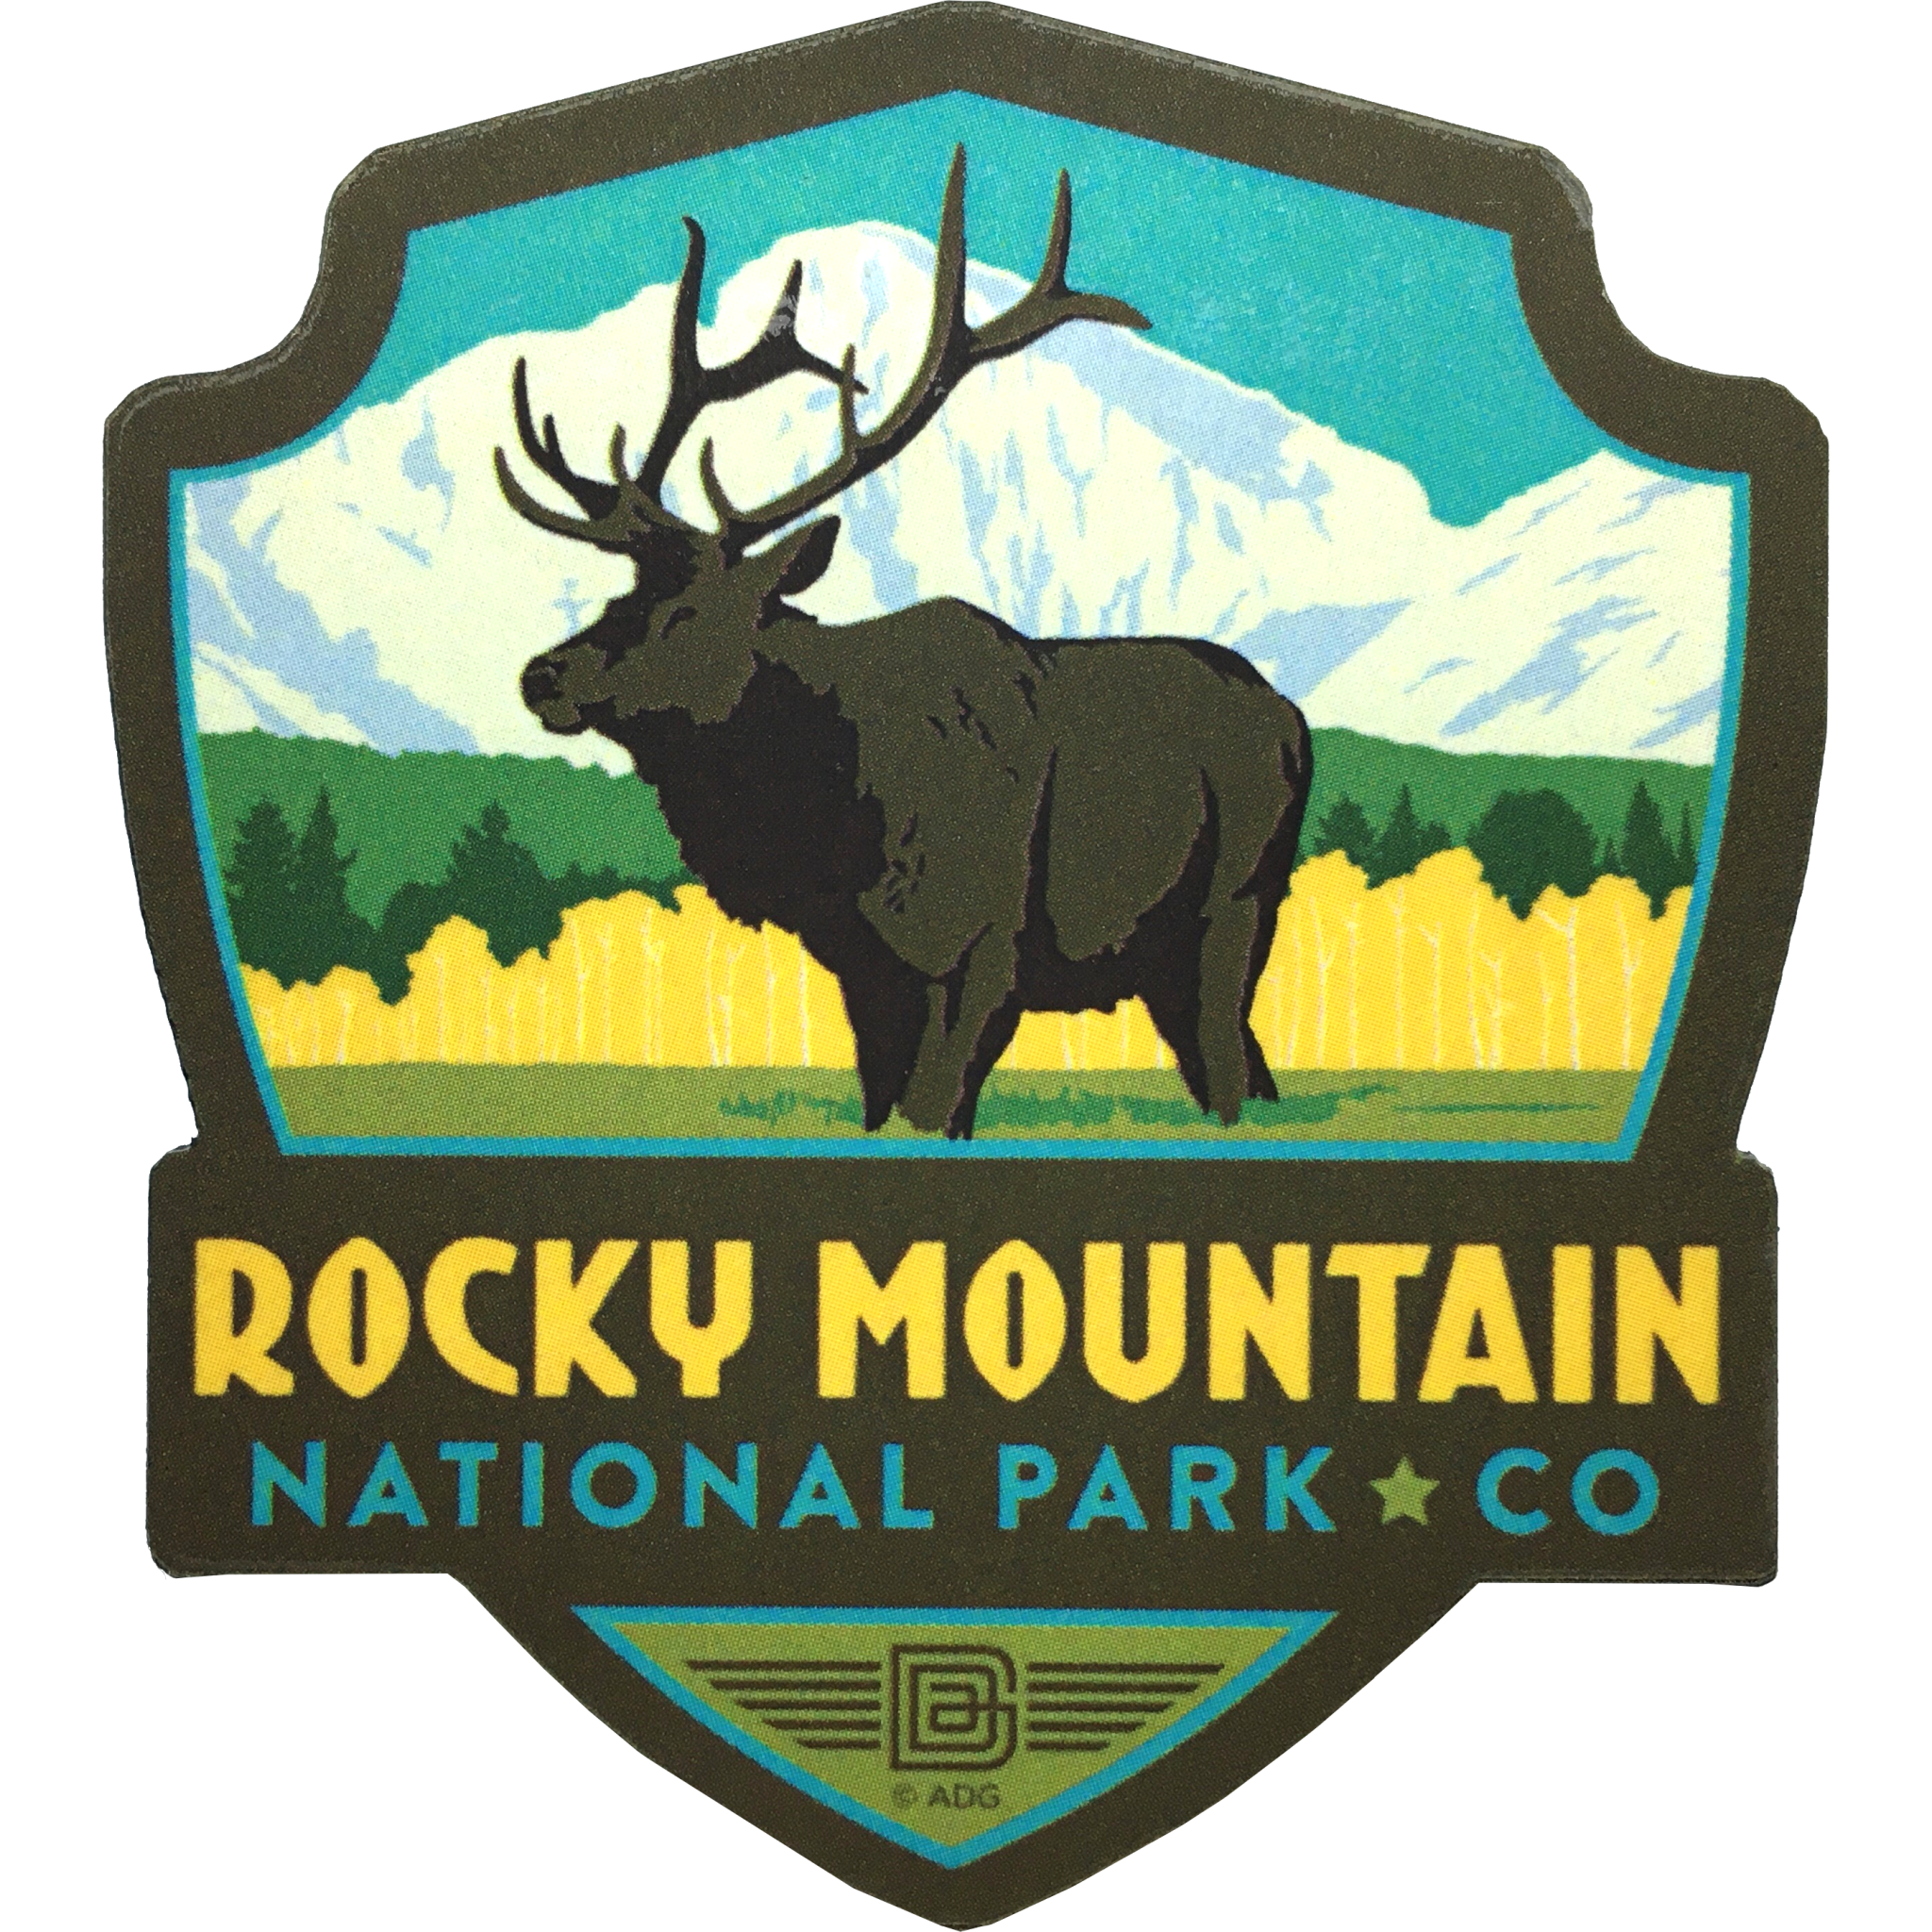 rocky mountain national park logo